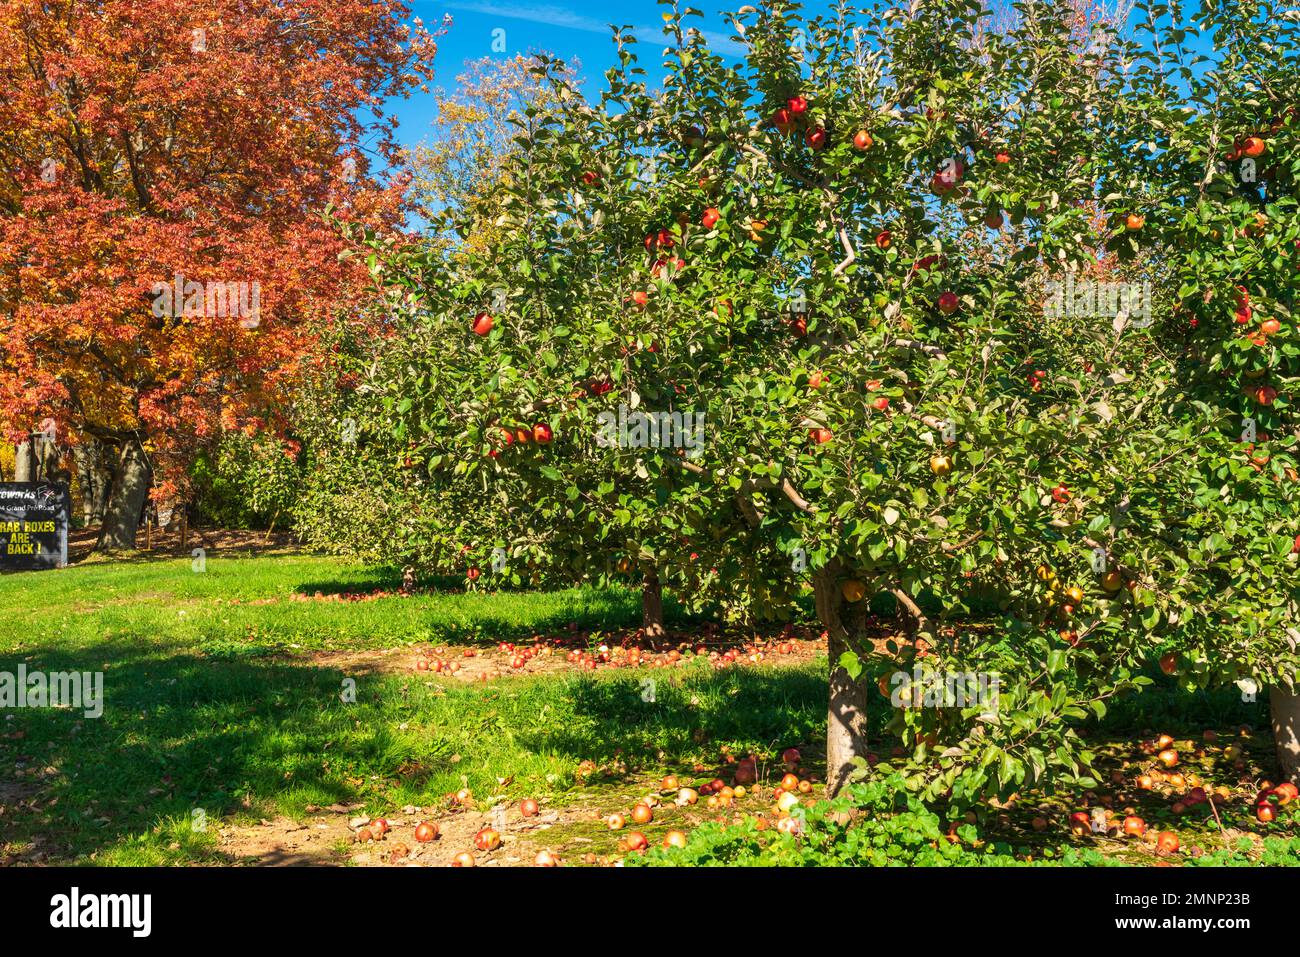 https://c8.alamy.com/comp/2MNP23B/honeycrisp-apples-in-the-wolfville-apple-orchards-wolfville-nova-scotia-canada-2MNP23B.jpg